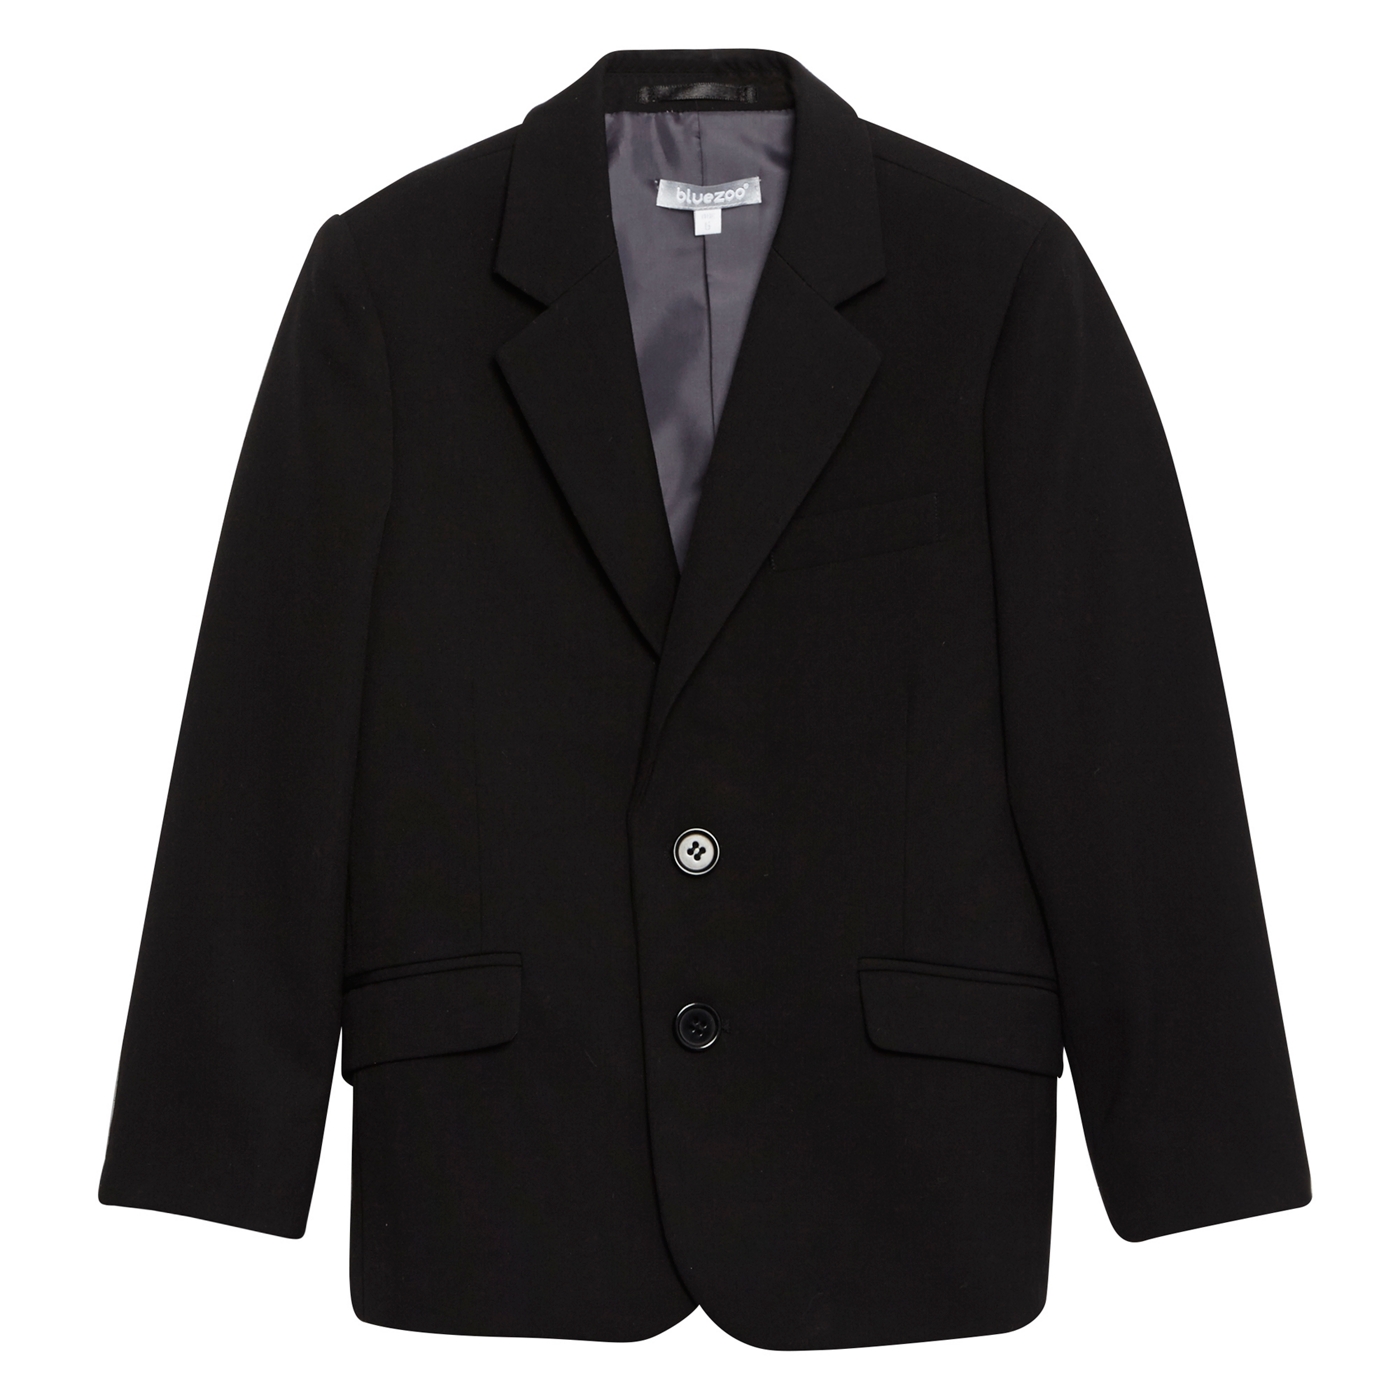 bluezoo Boys black suit jacket